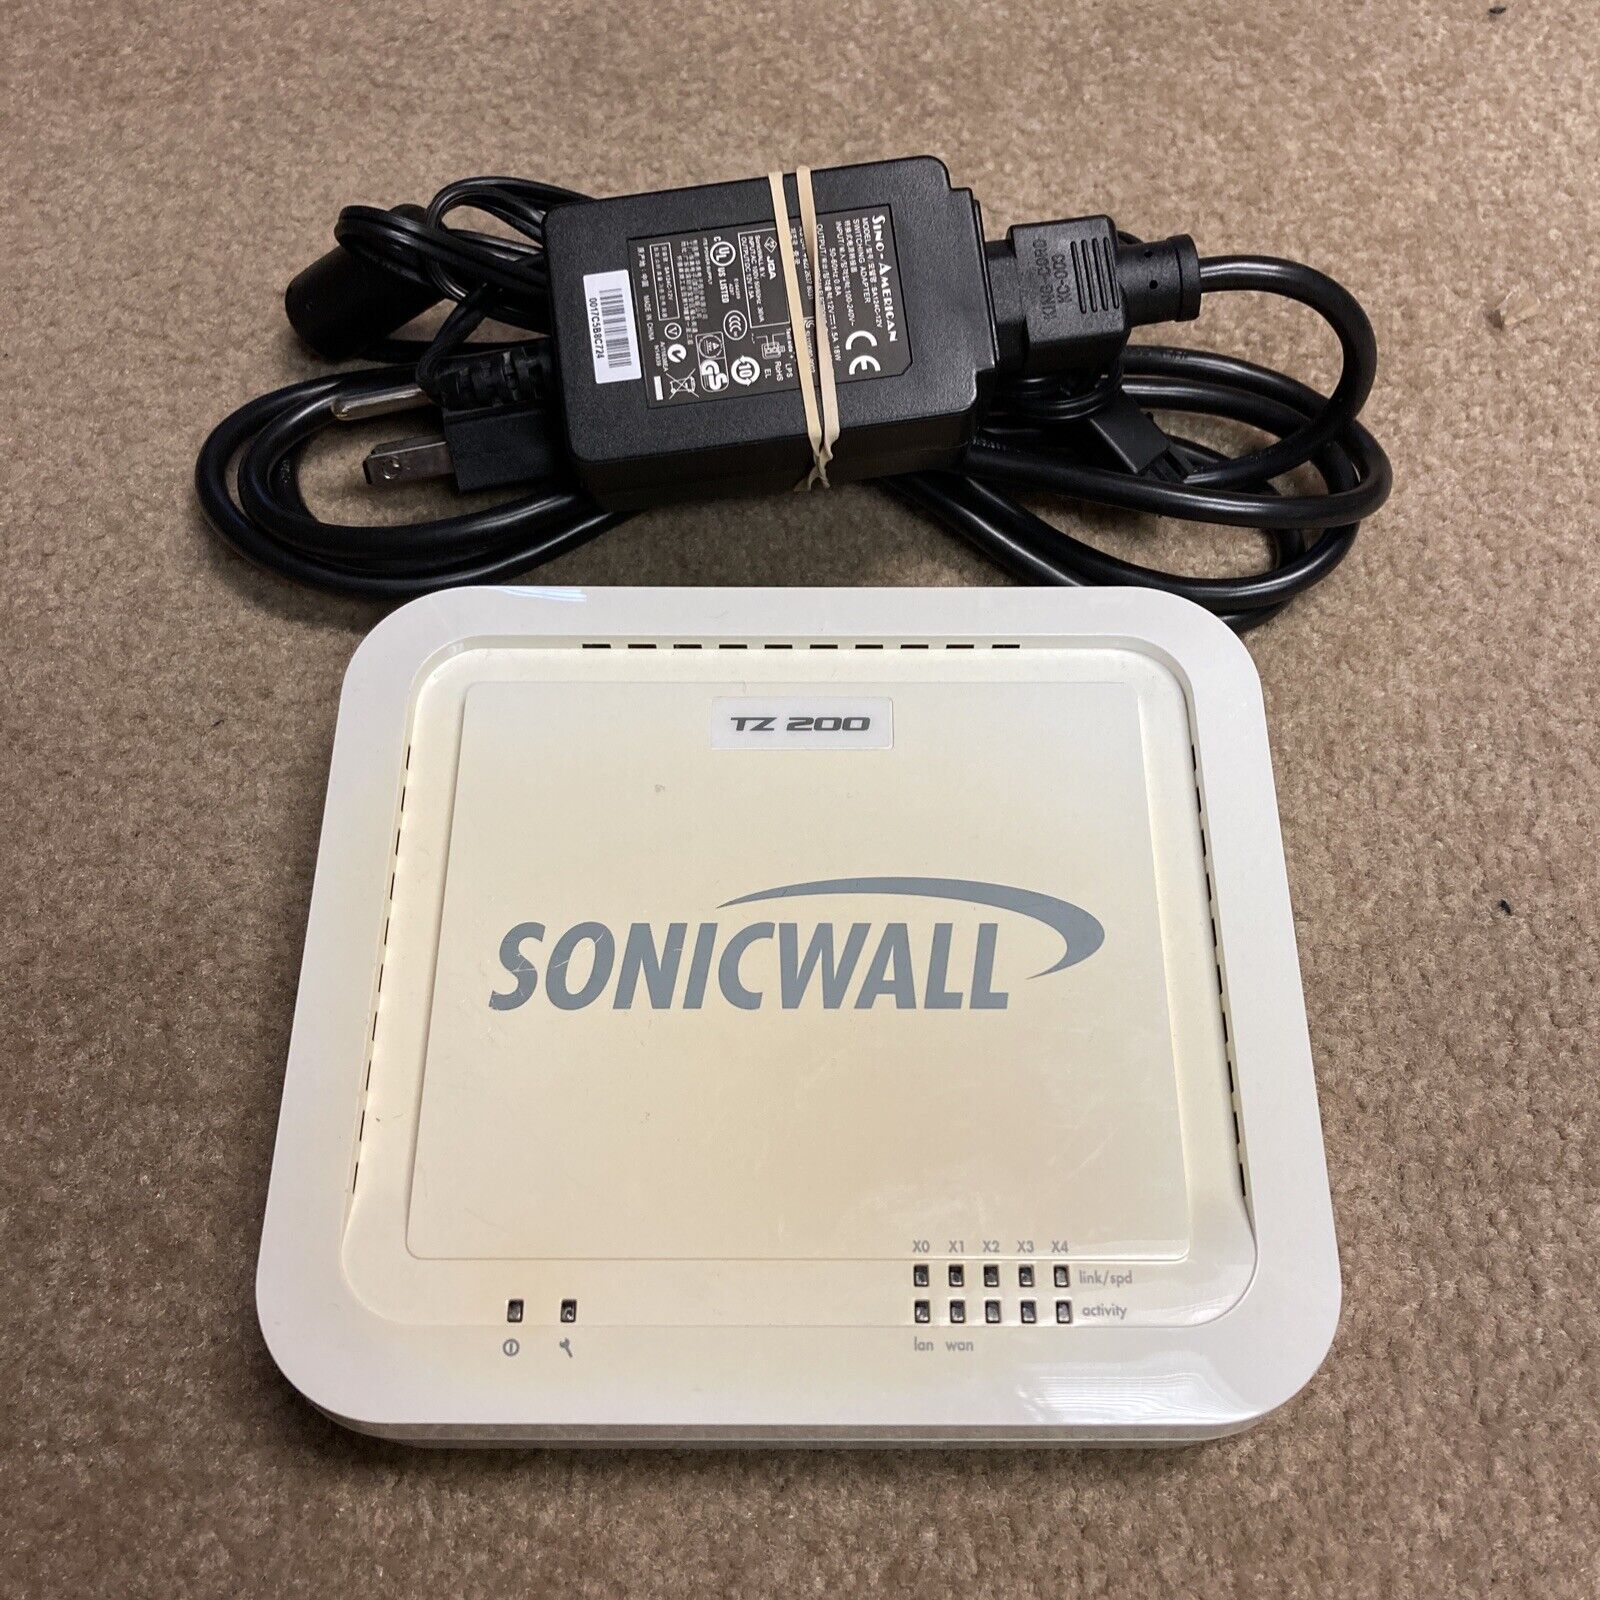 Sonicwall TZ 200 Network Firewall Router